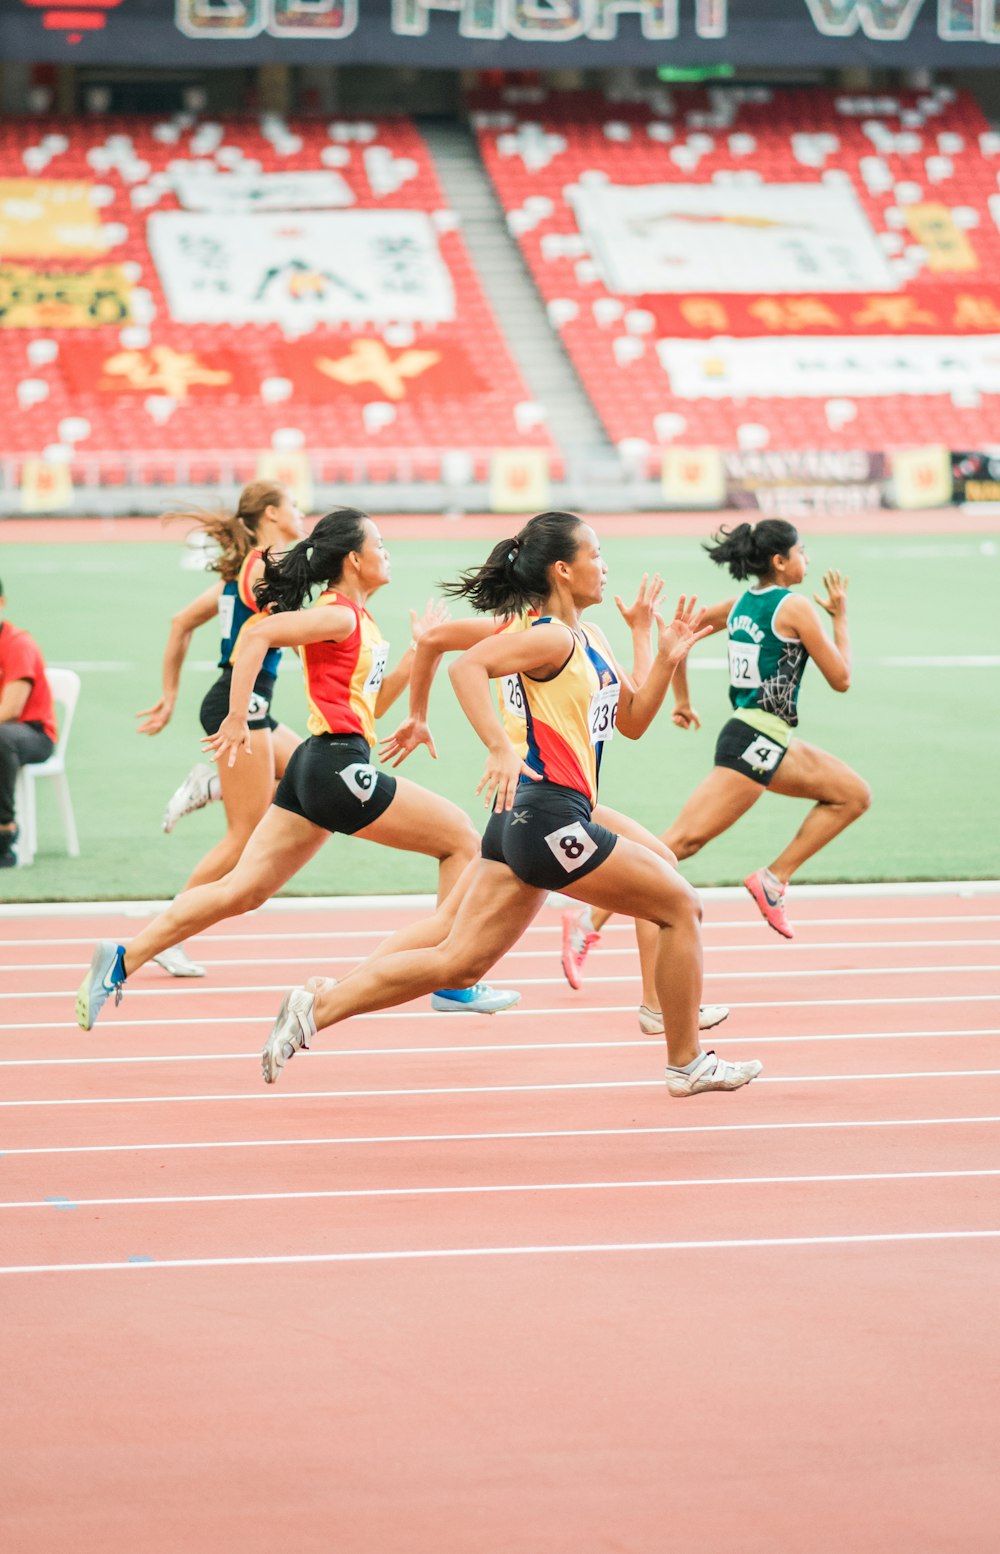 women running on track field